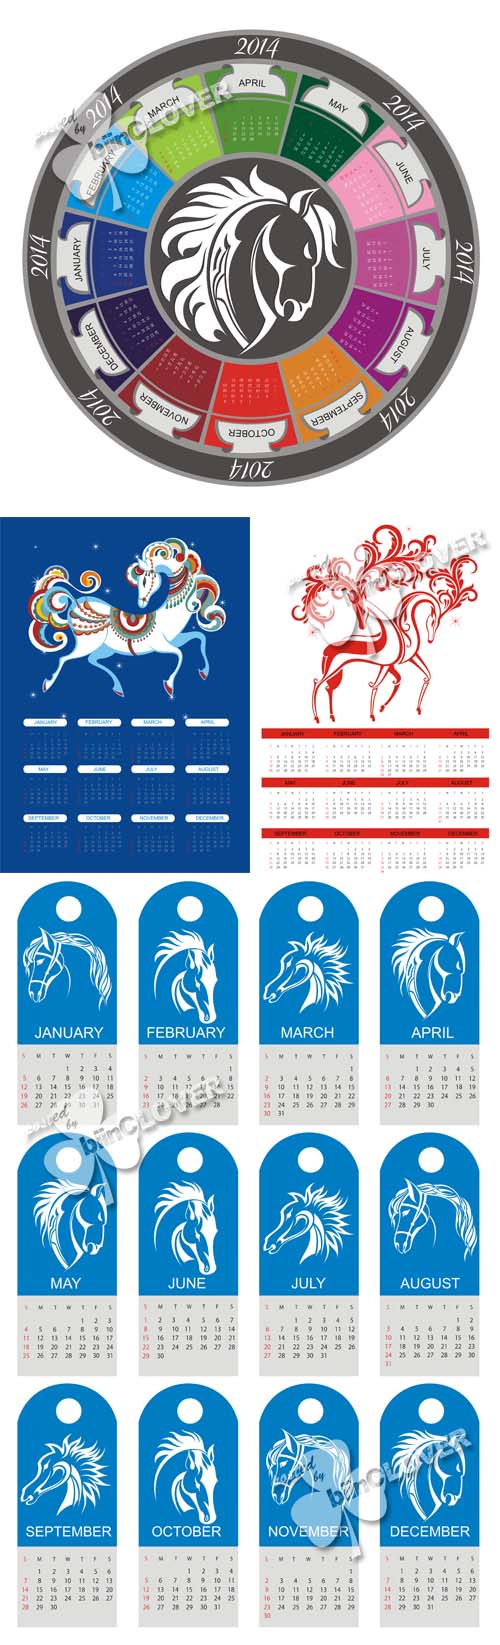 2014 calendar with horse symbols 0501